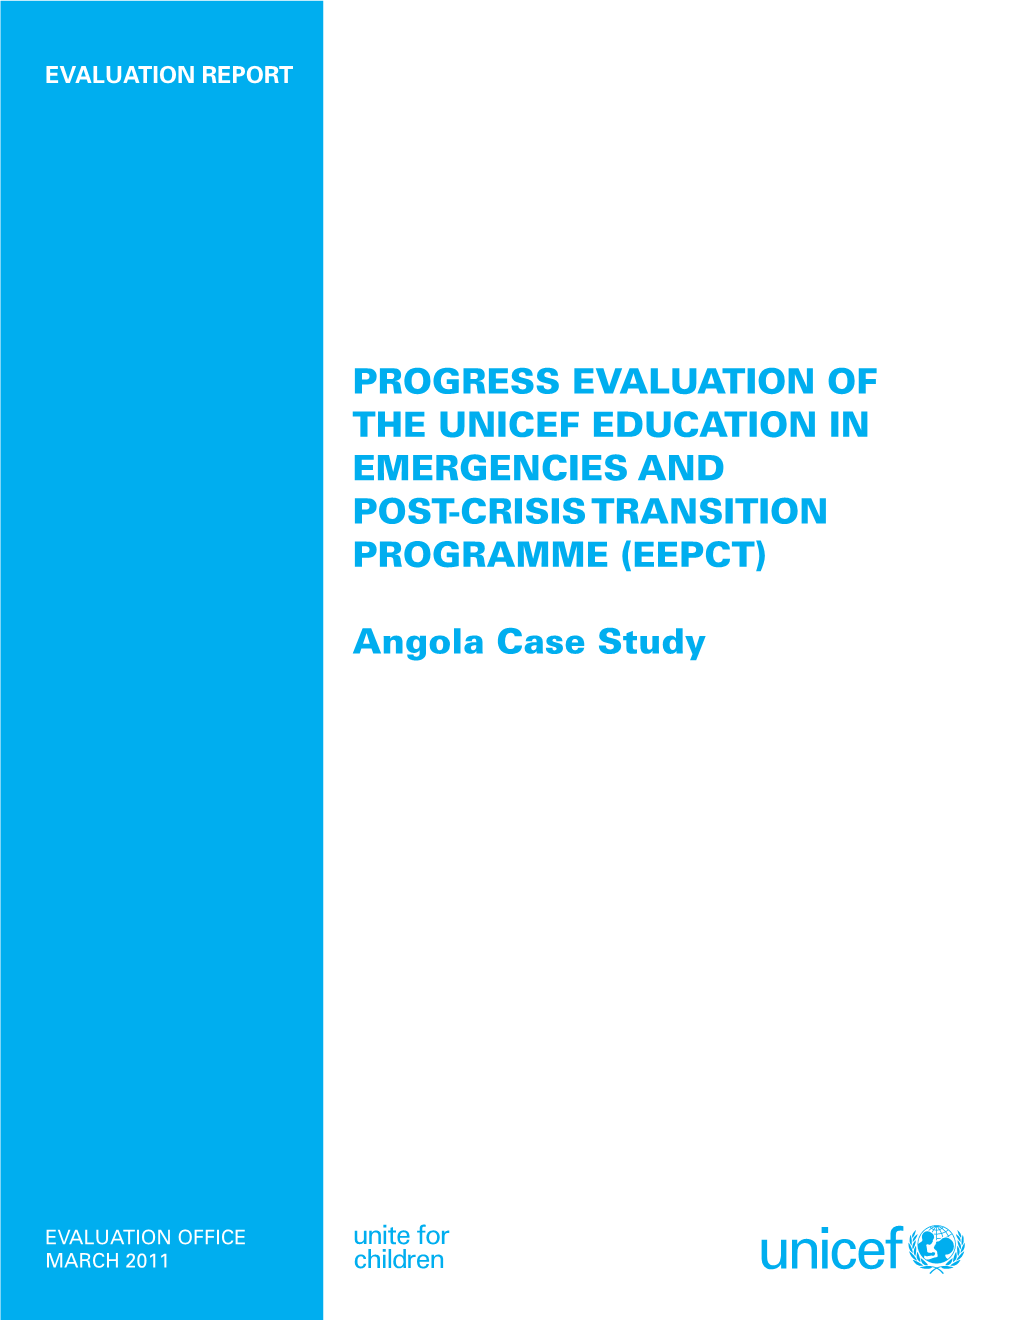 Angola Case Study